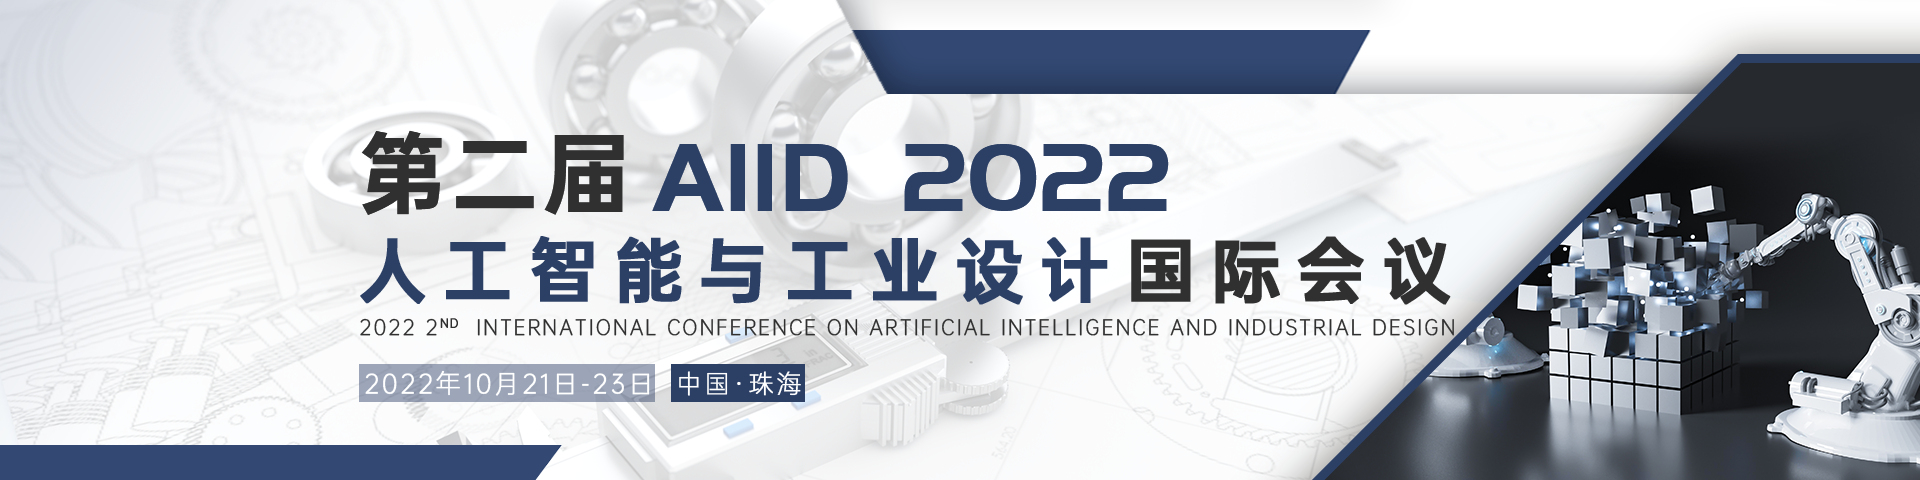 10月延期广州AIID-2022会议官网中文banner-何雪仪-20211227.png